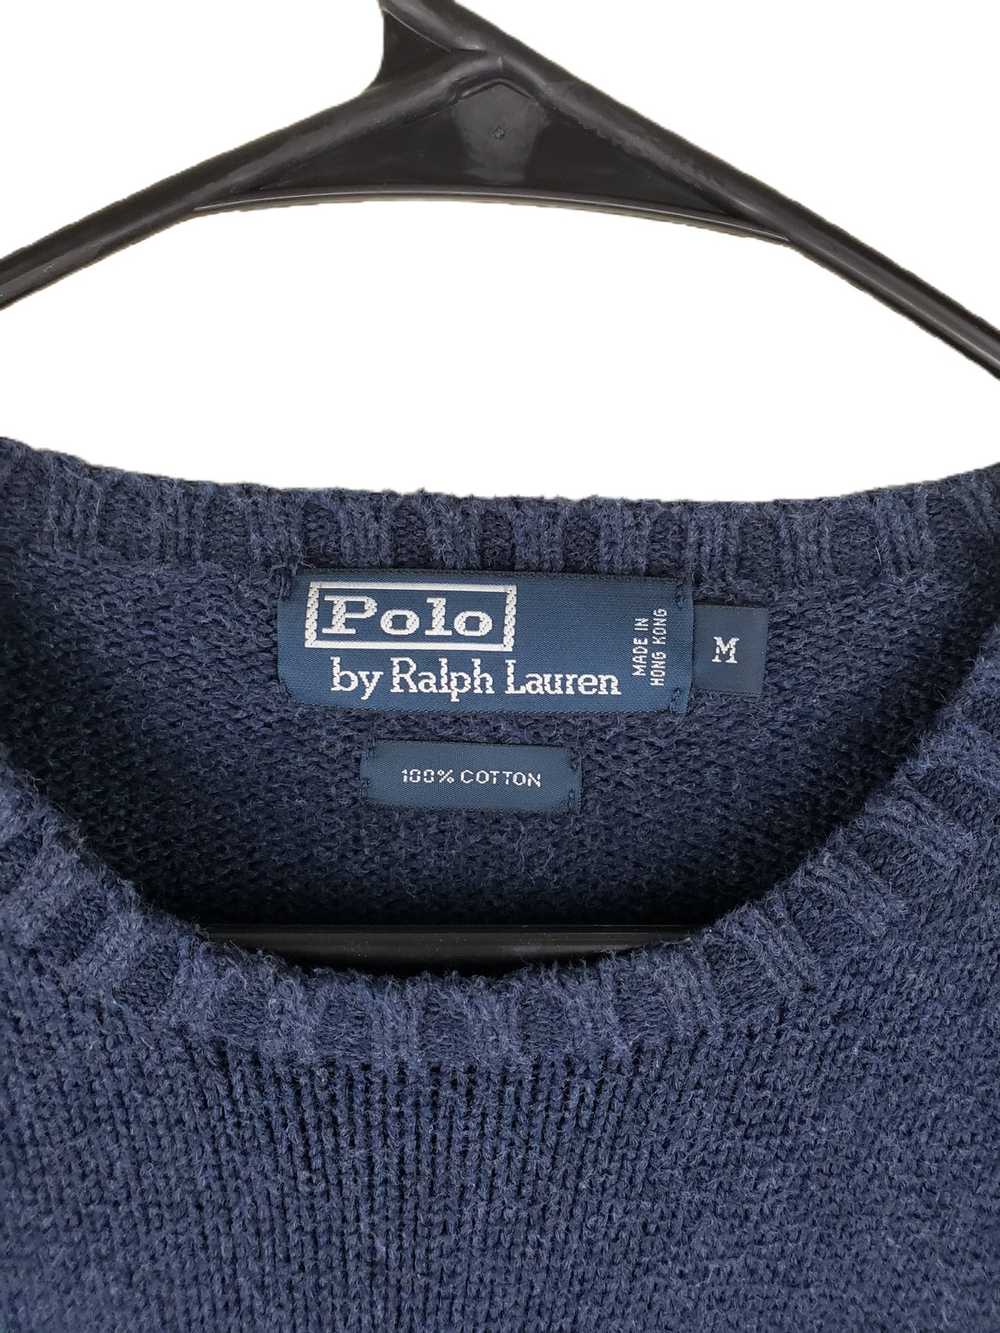 Polo Ralph Lauren Polo Ralph Lauren Knit Sweater - image 2